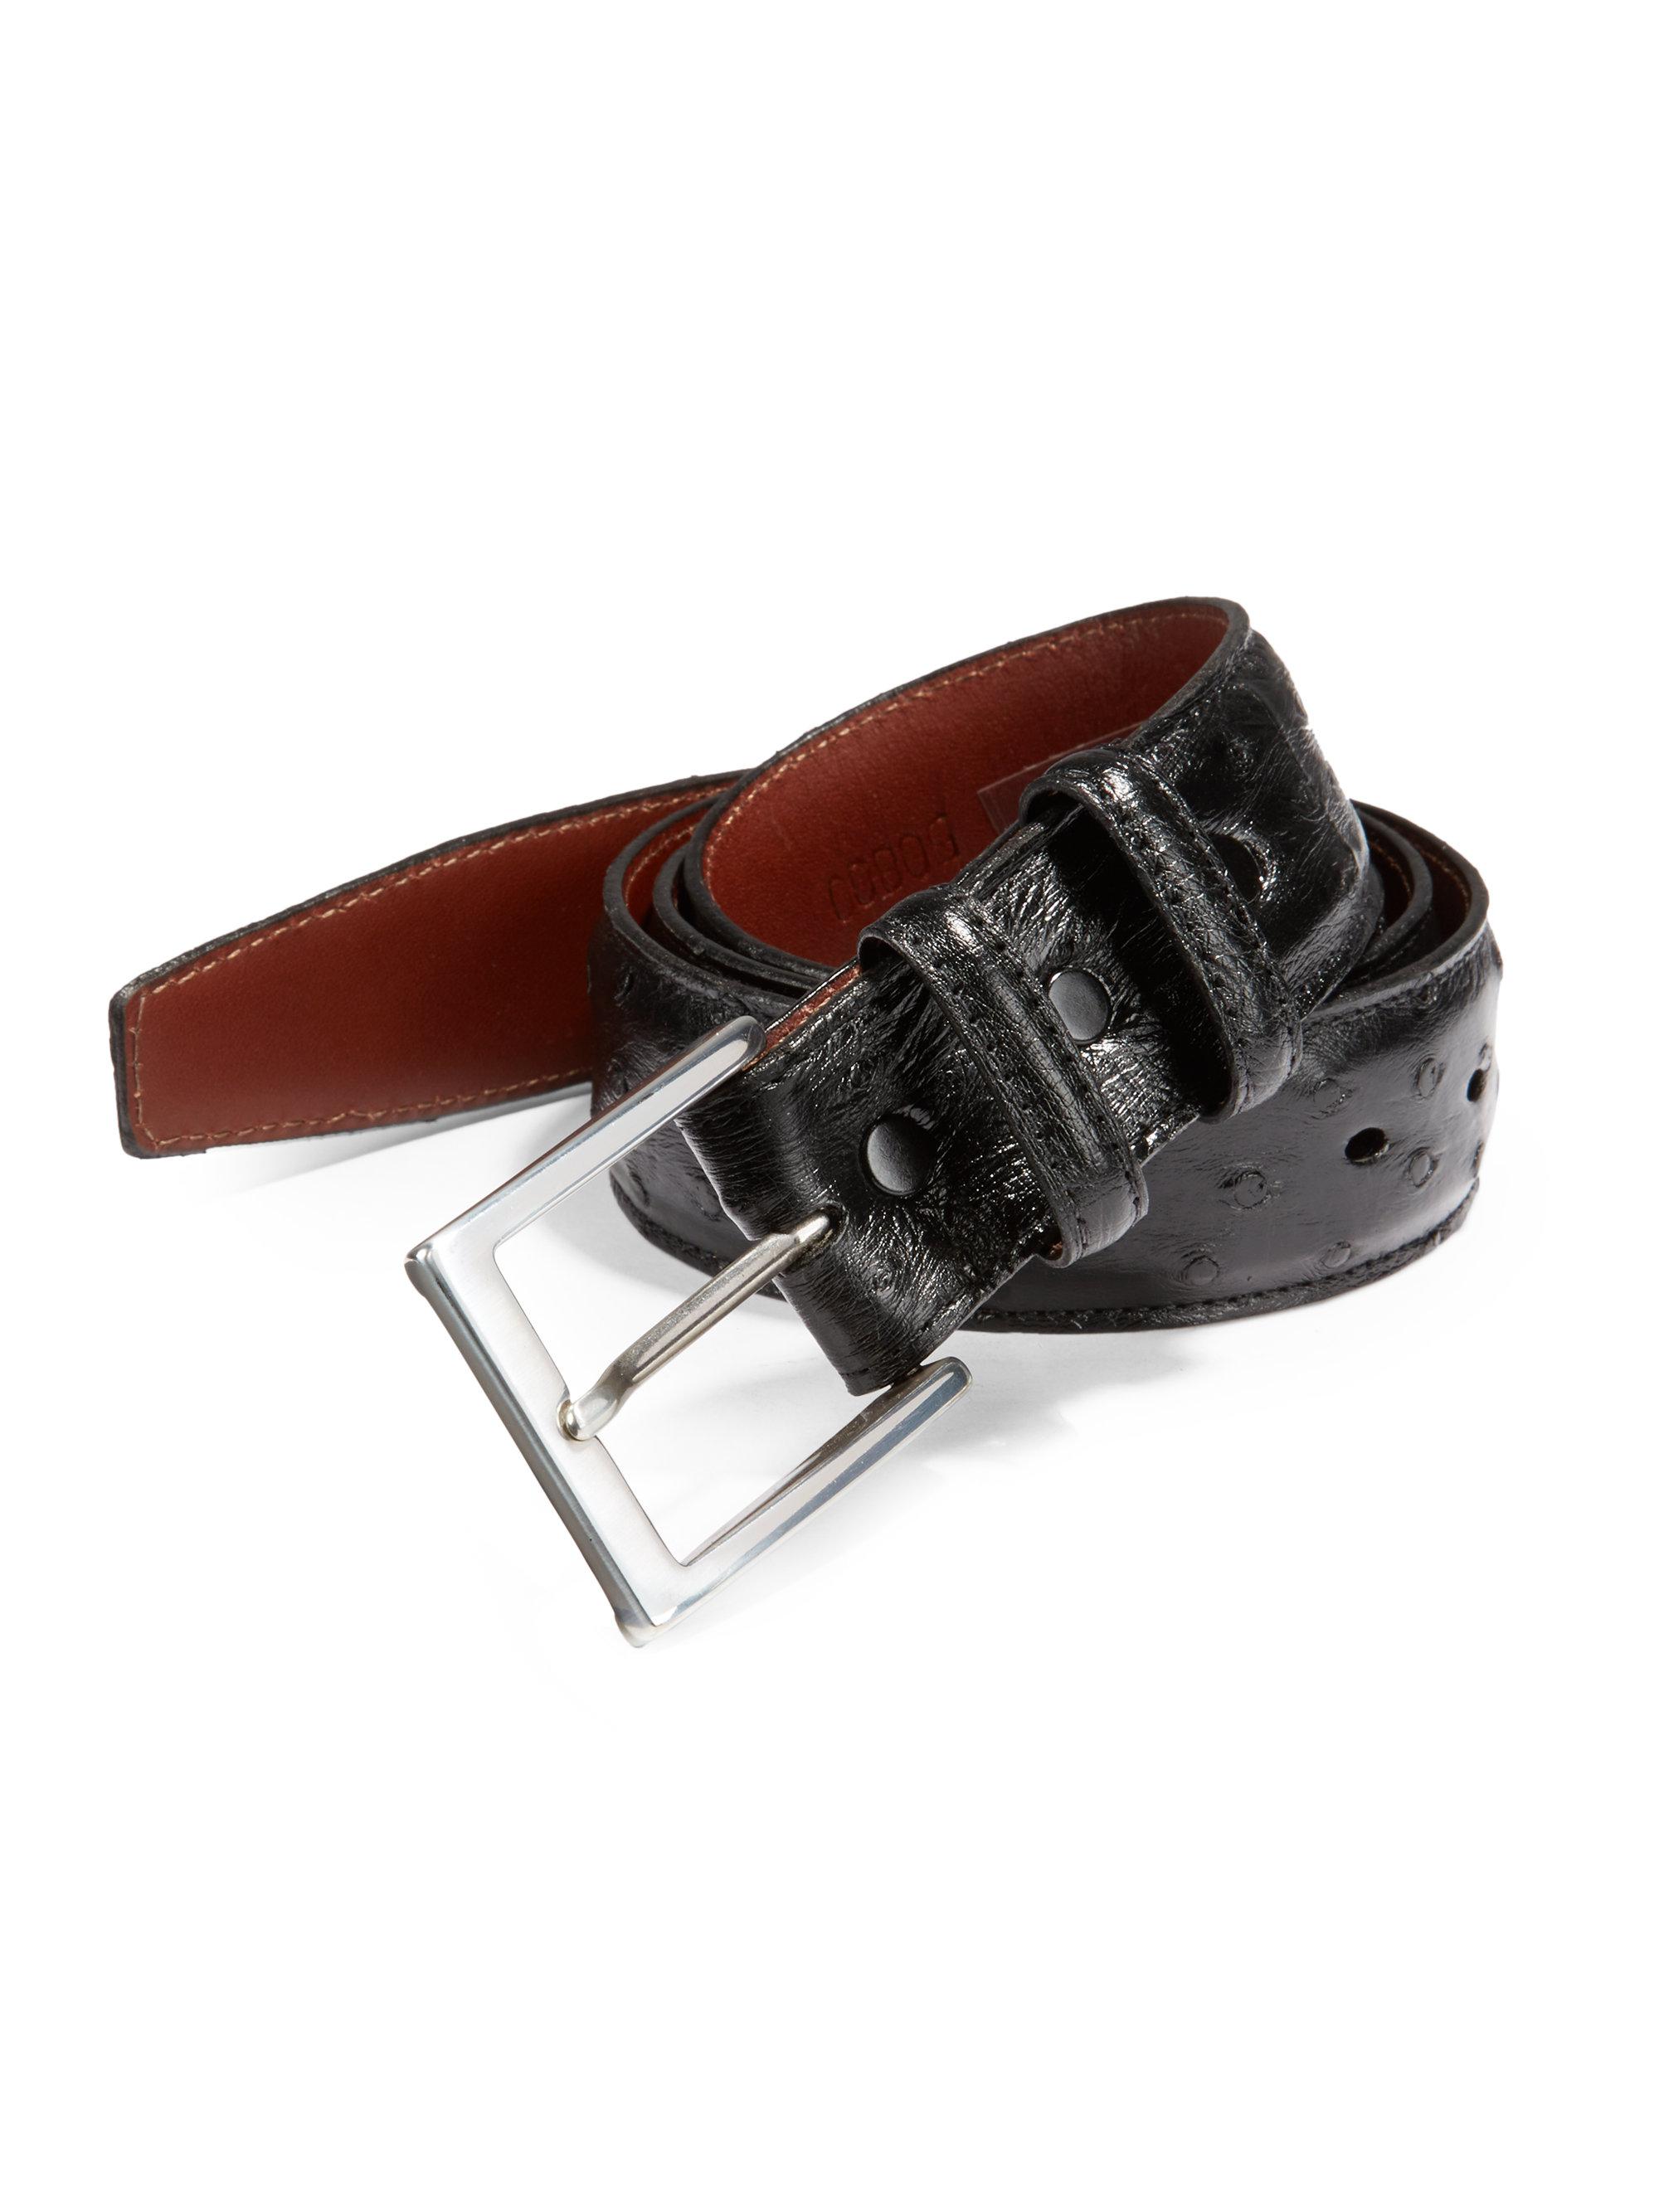 Lyst - Saks Fifth Avenue Ostrich Leather Belt in Black for Men